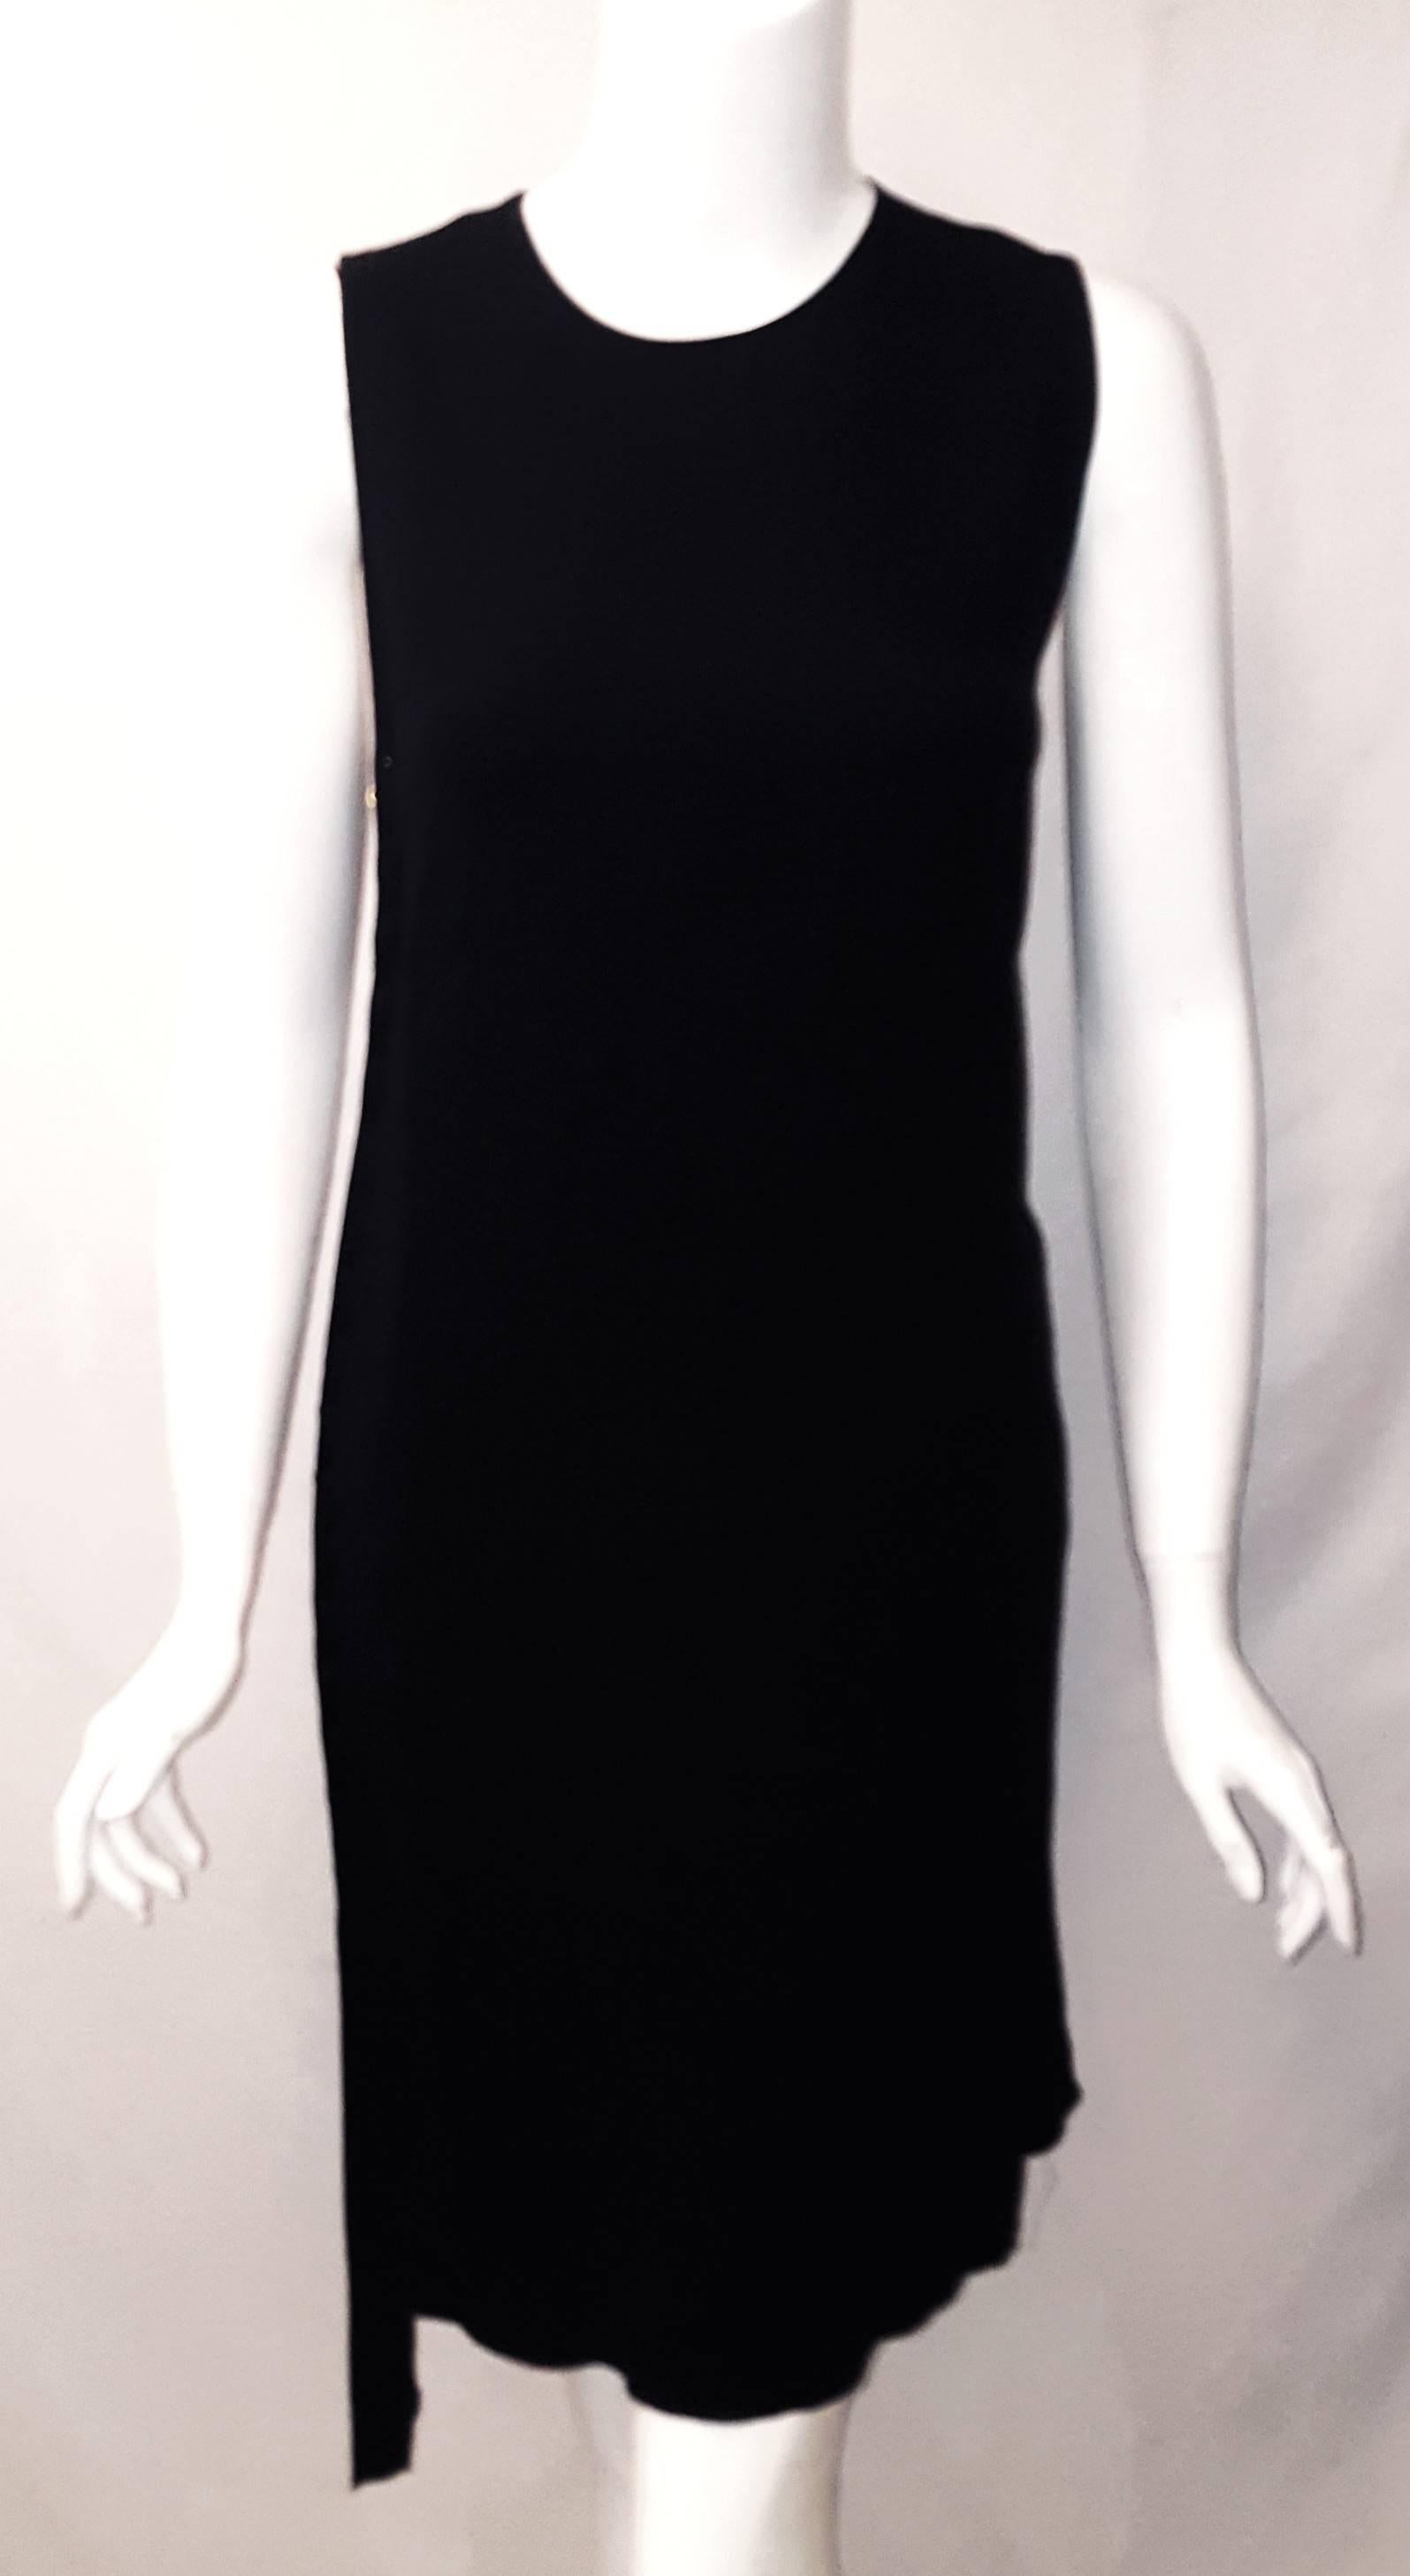 Lanvin's summer 2015 black sleeveless sheath dress has a round collar and a hidden back zipper for closure.  The gold tone 1